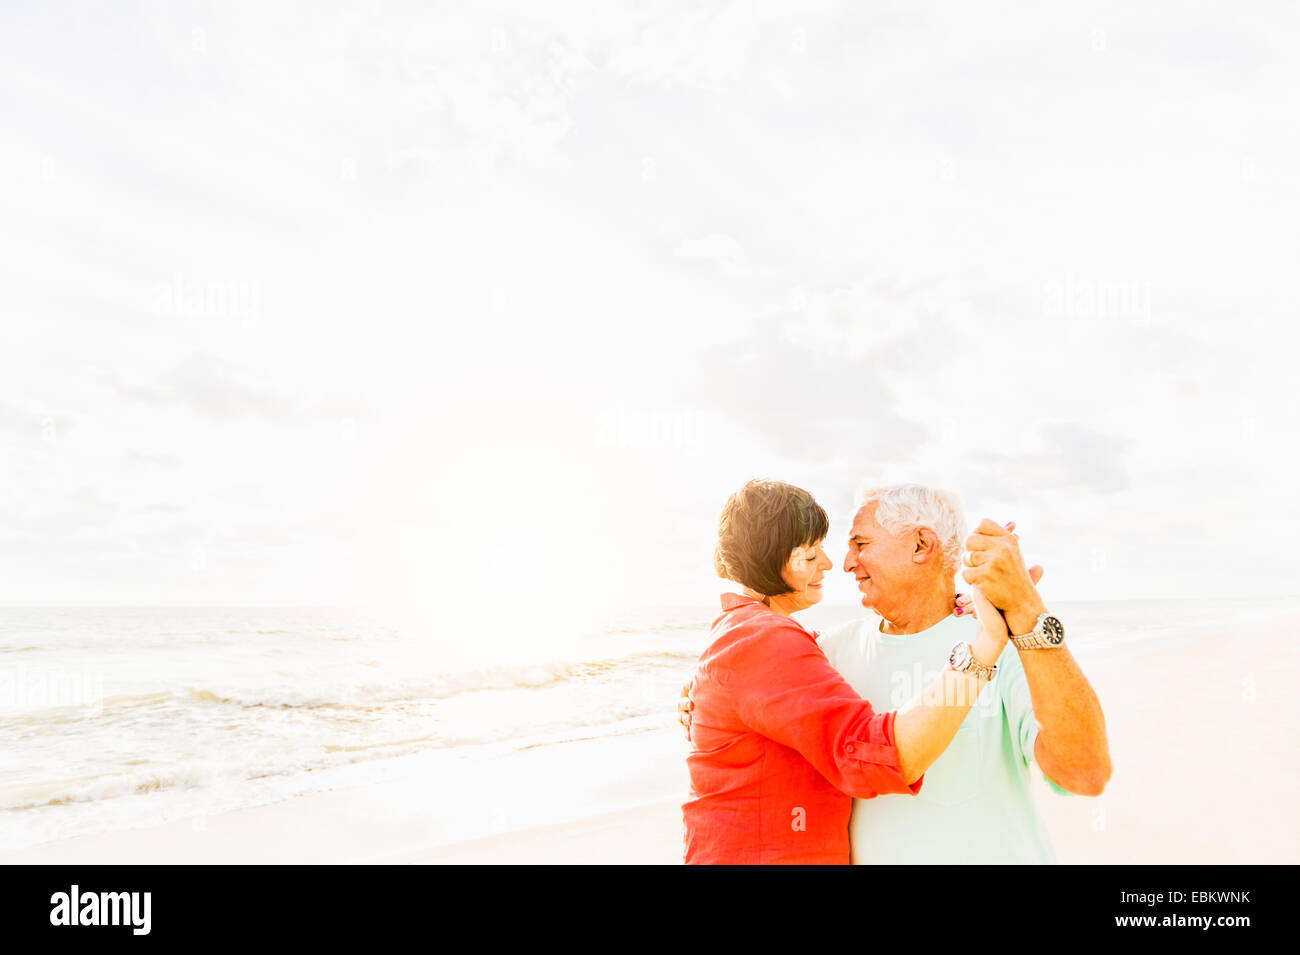 USA, Florida, Jupiter, Paare tanzen am Strand bei Sonnenaufgang Stockfoto